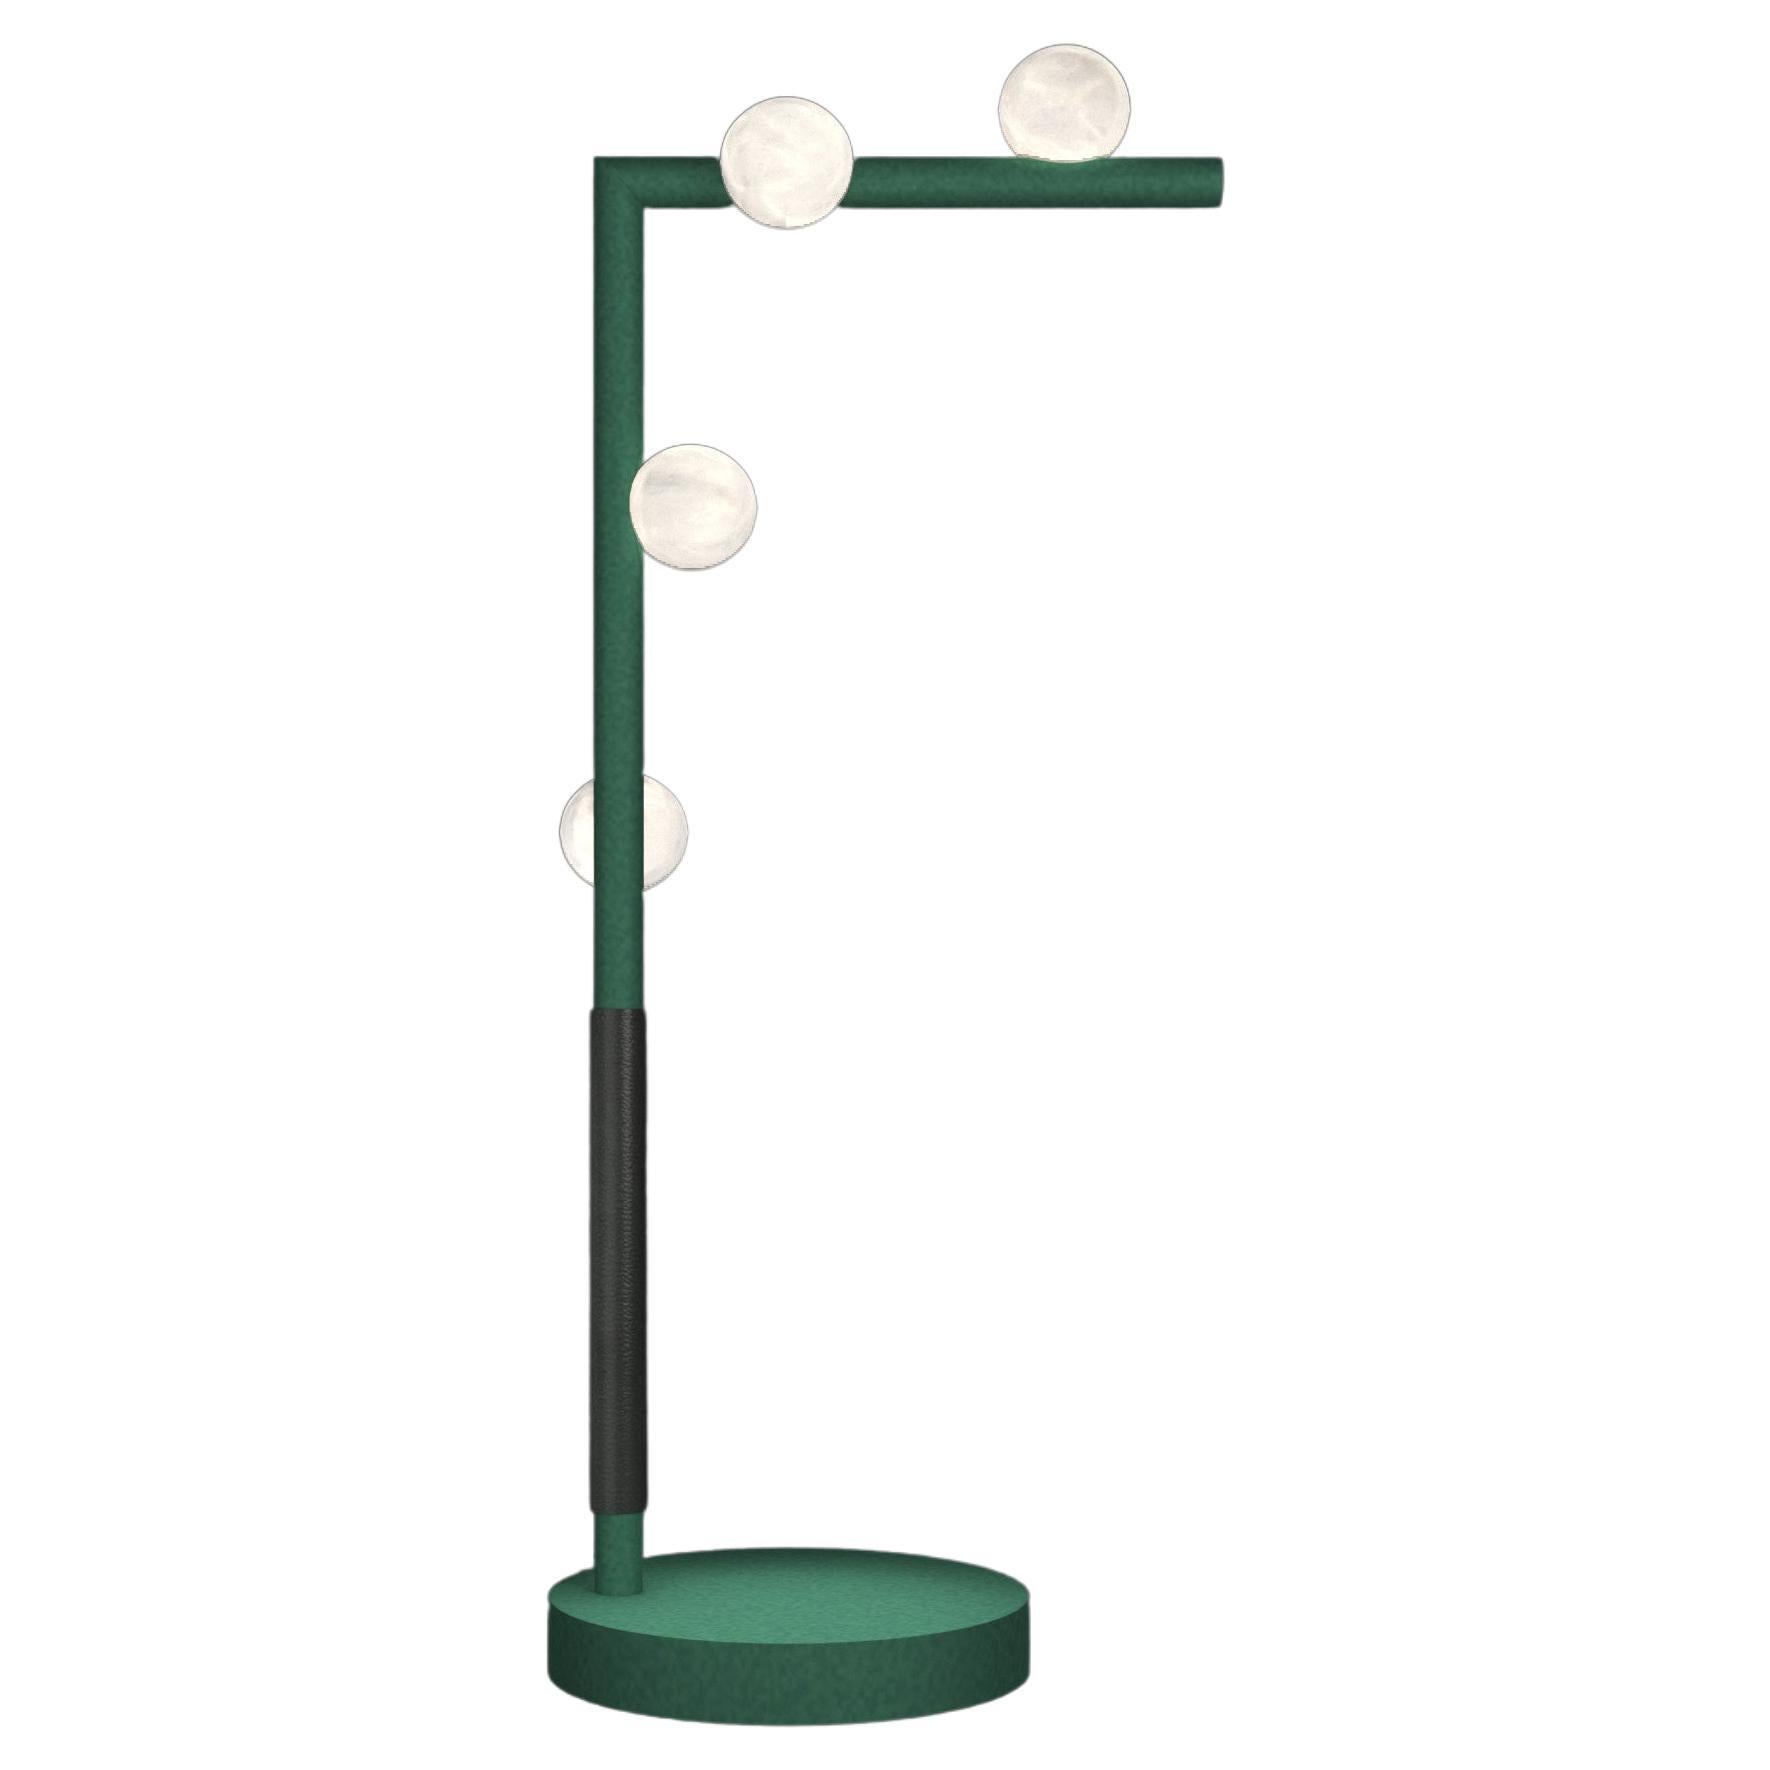 Demetra Freedom Green Metal Table Lamp by Alabastro Italiano